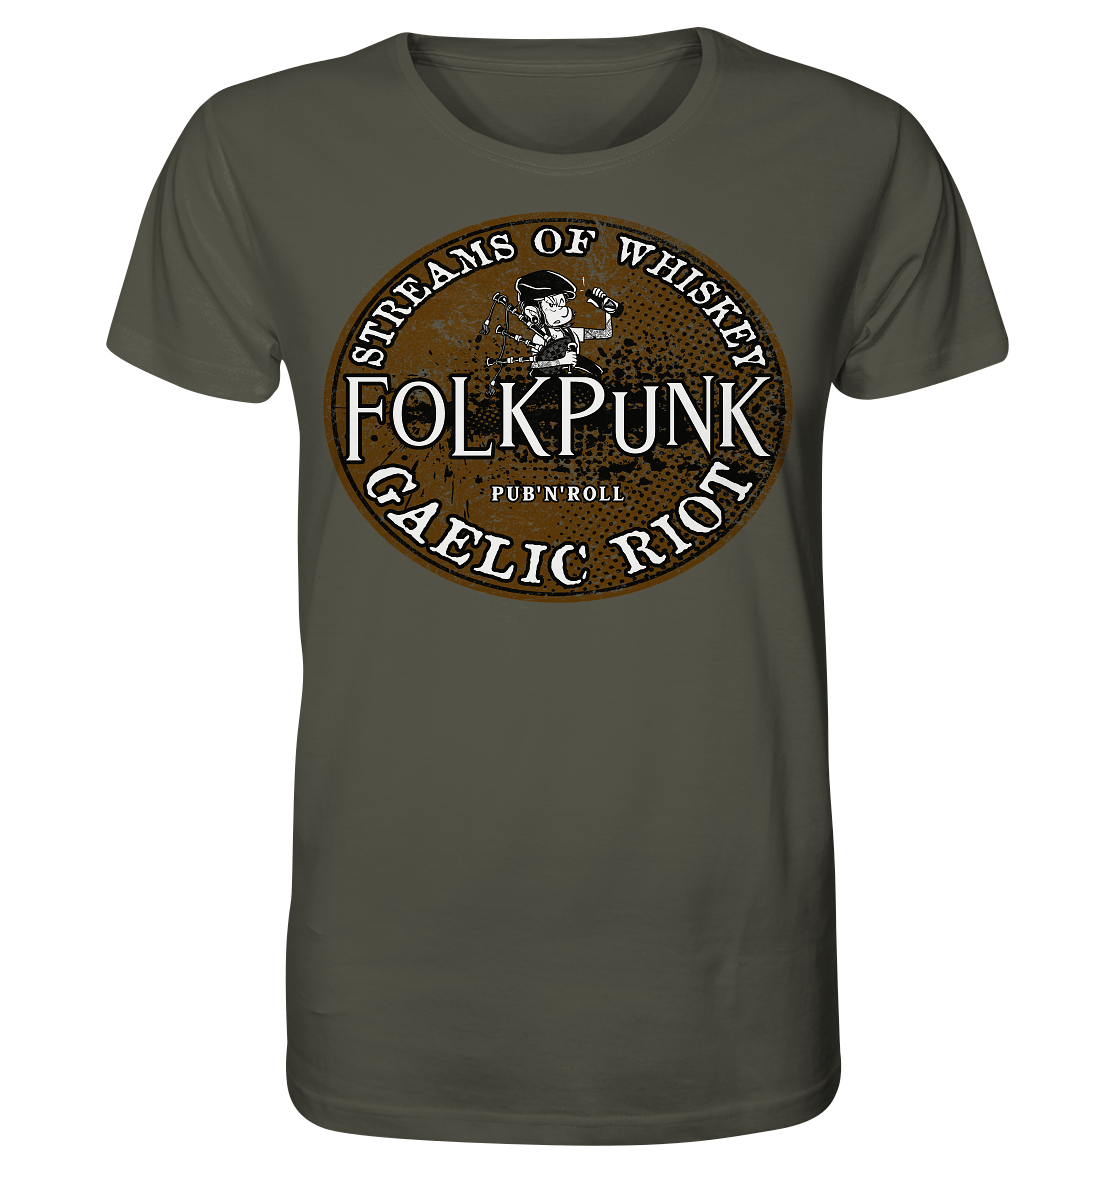 Folkpunk "Streams Of Whiskey" - Organic Shirt